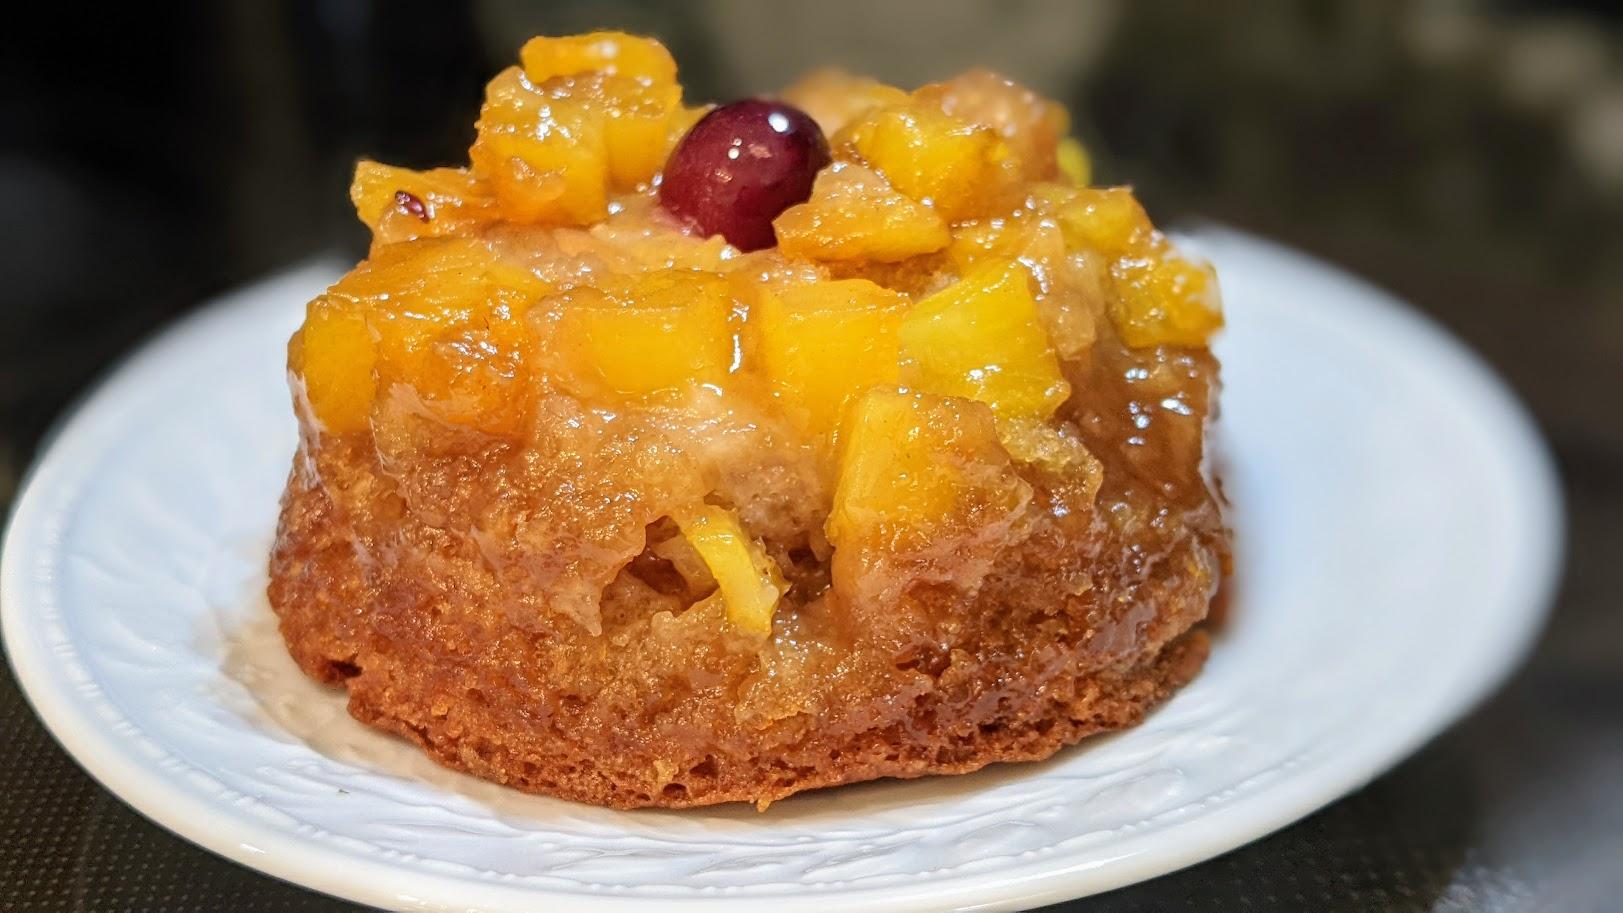 https://koshercowboy.com/wp-content/uploads/2022/06/pineapple-upside-down-cake-recipe.jpg